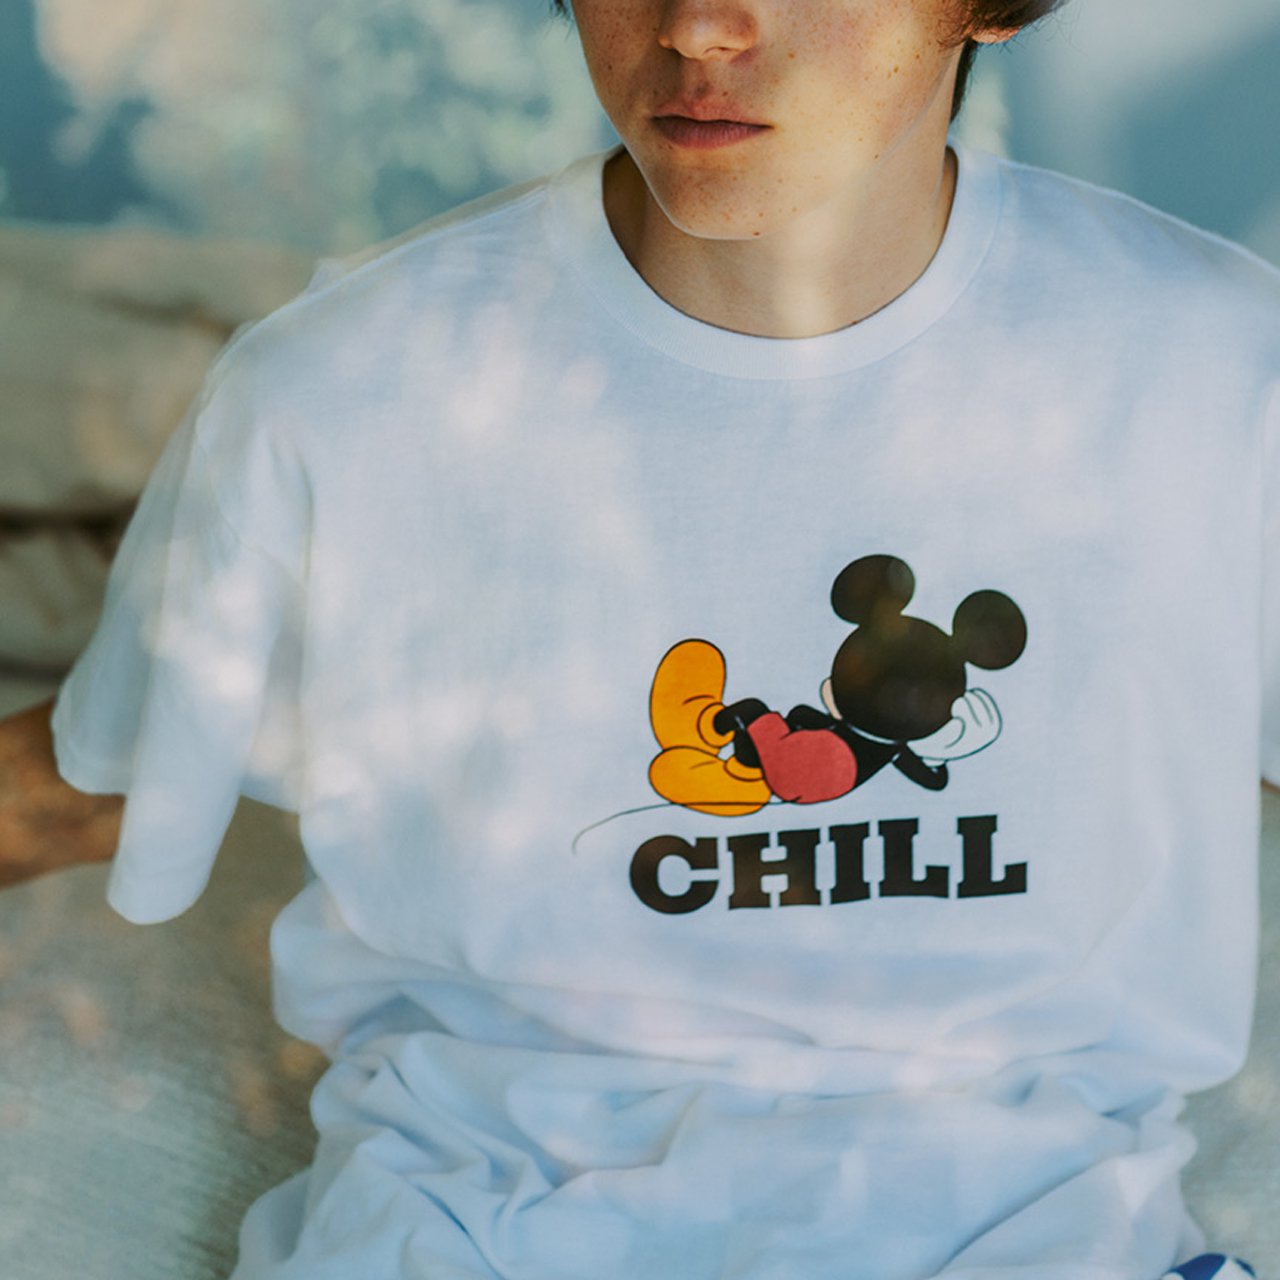 STANDARD CALIFORNIA(スタンダードカリフォルニア)24SS/春夏
Disney×SD Chill Tee
ディズニーコラボレーションTシャツ
ミッキー
半袖Tシャツ

